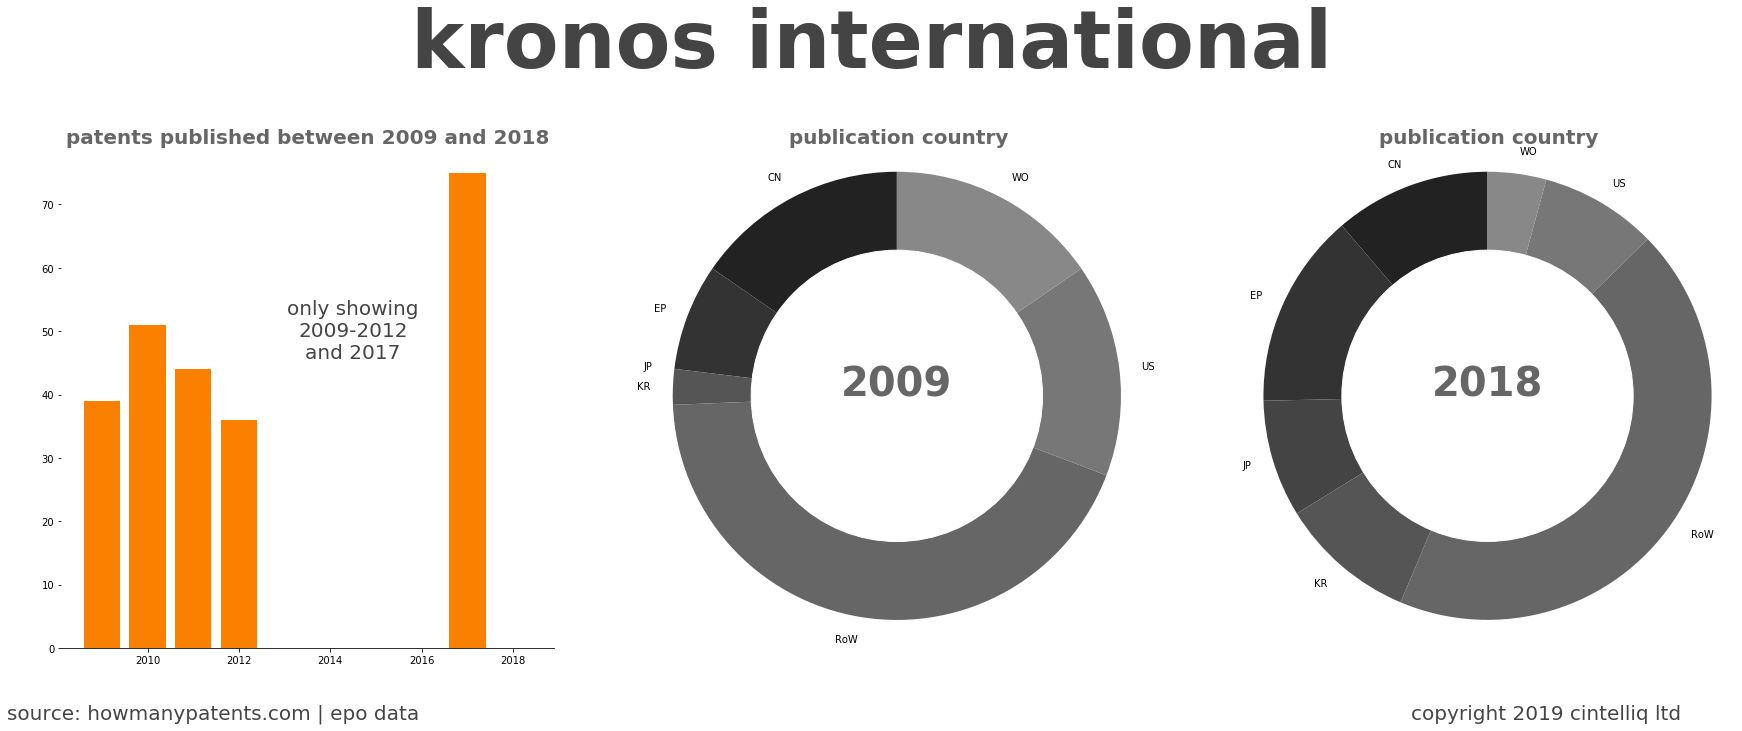 summary of patents for Kronos International